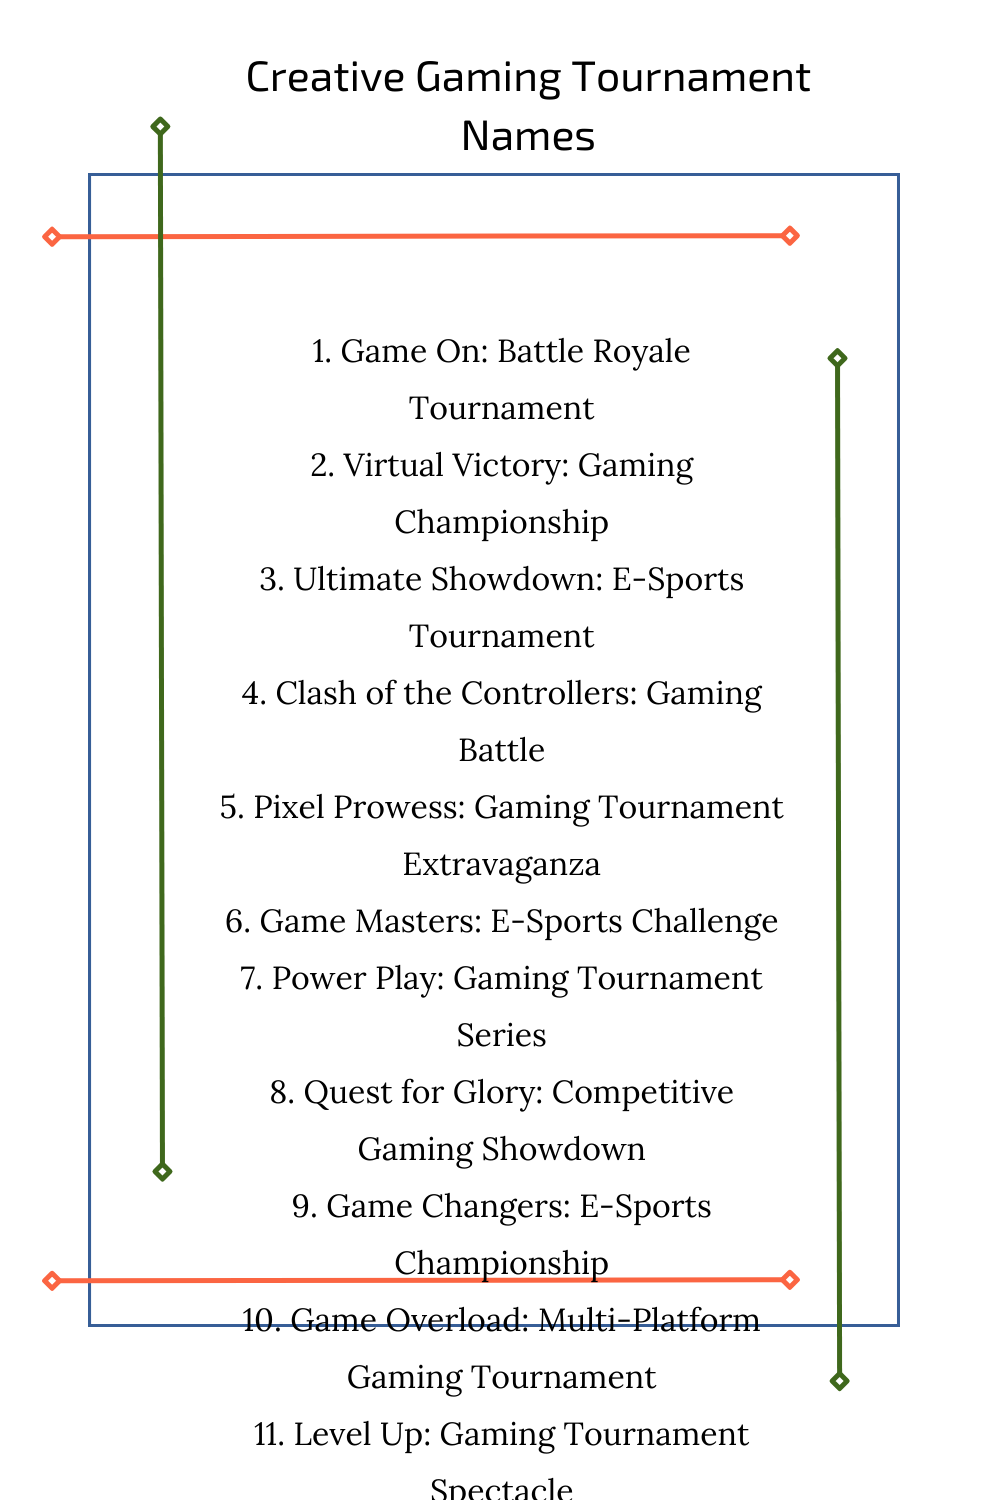 Creative Gaming Tournament Names